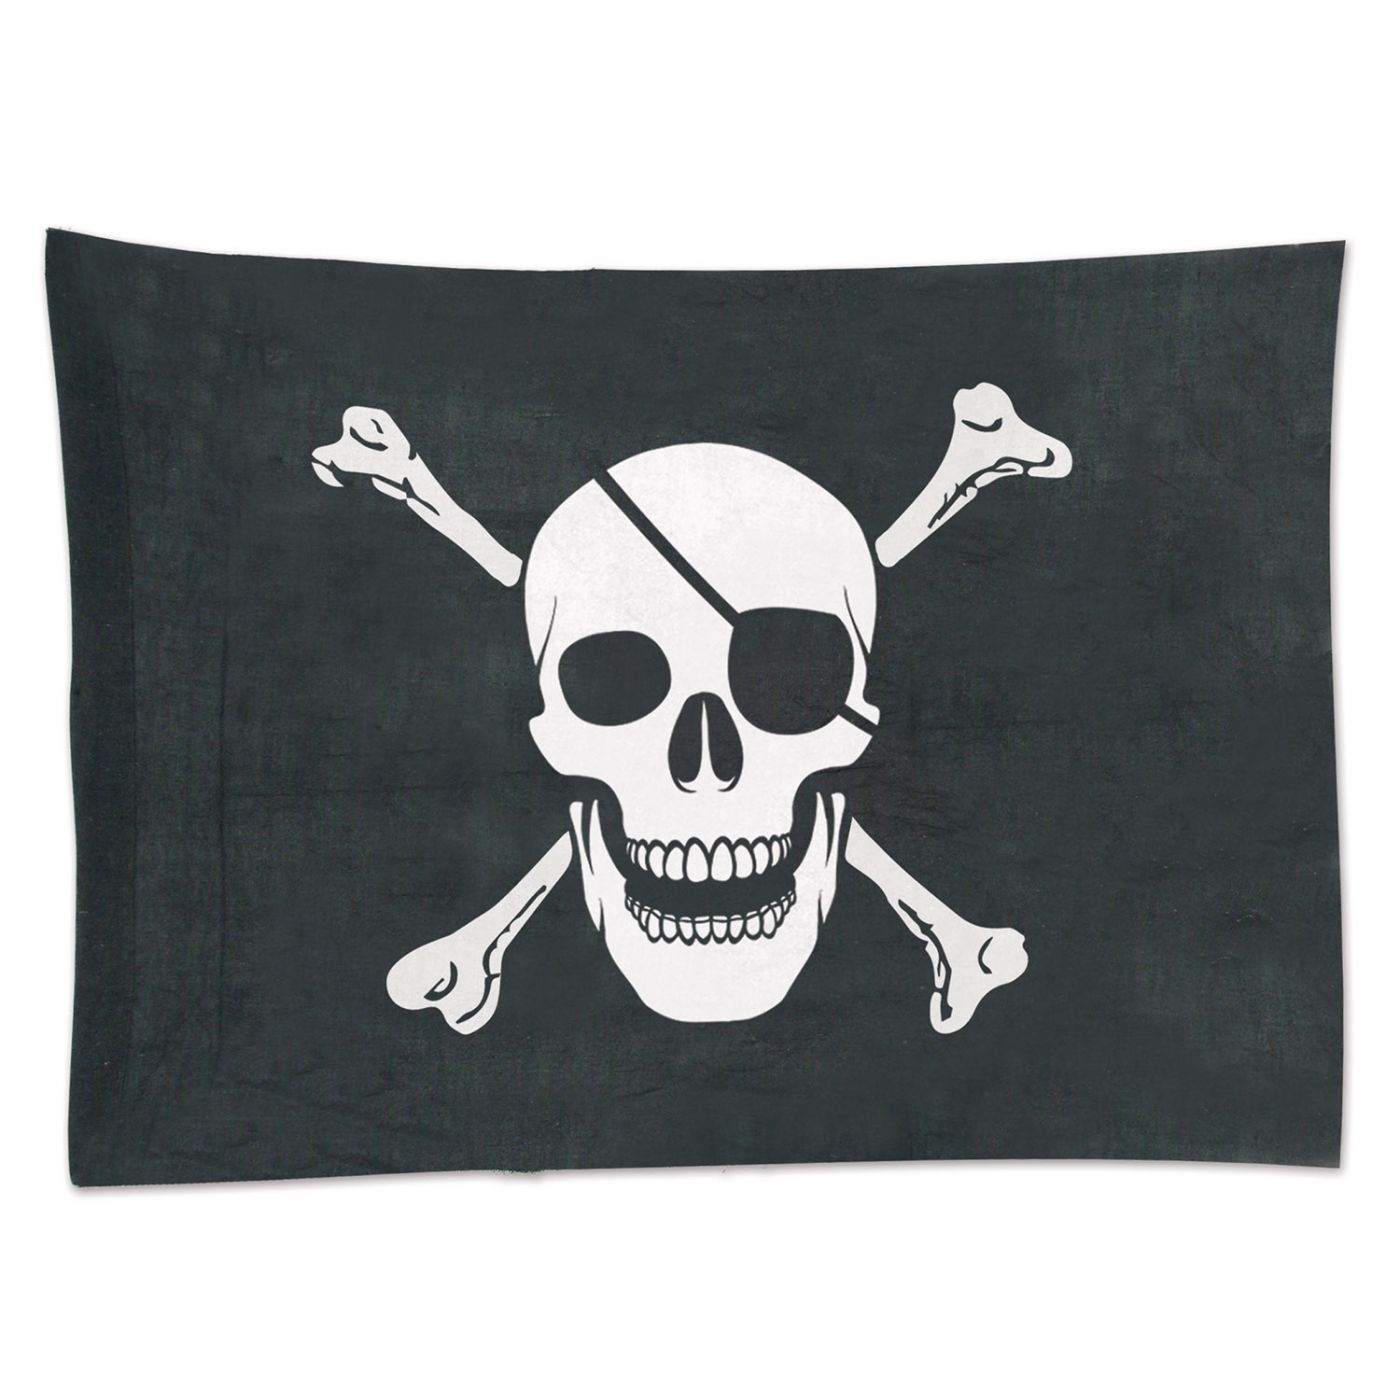 Pirate Flag image